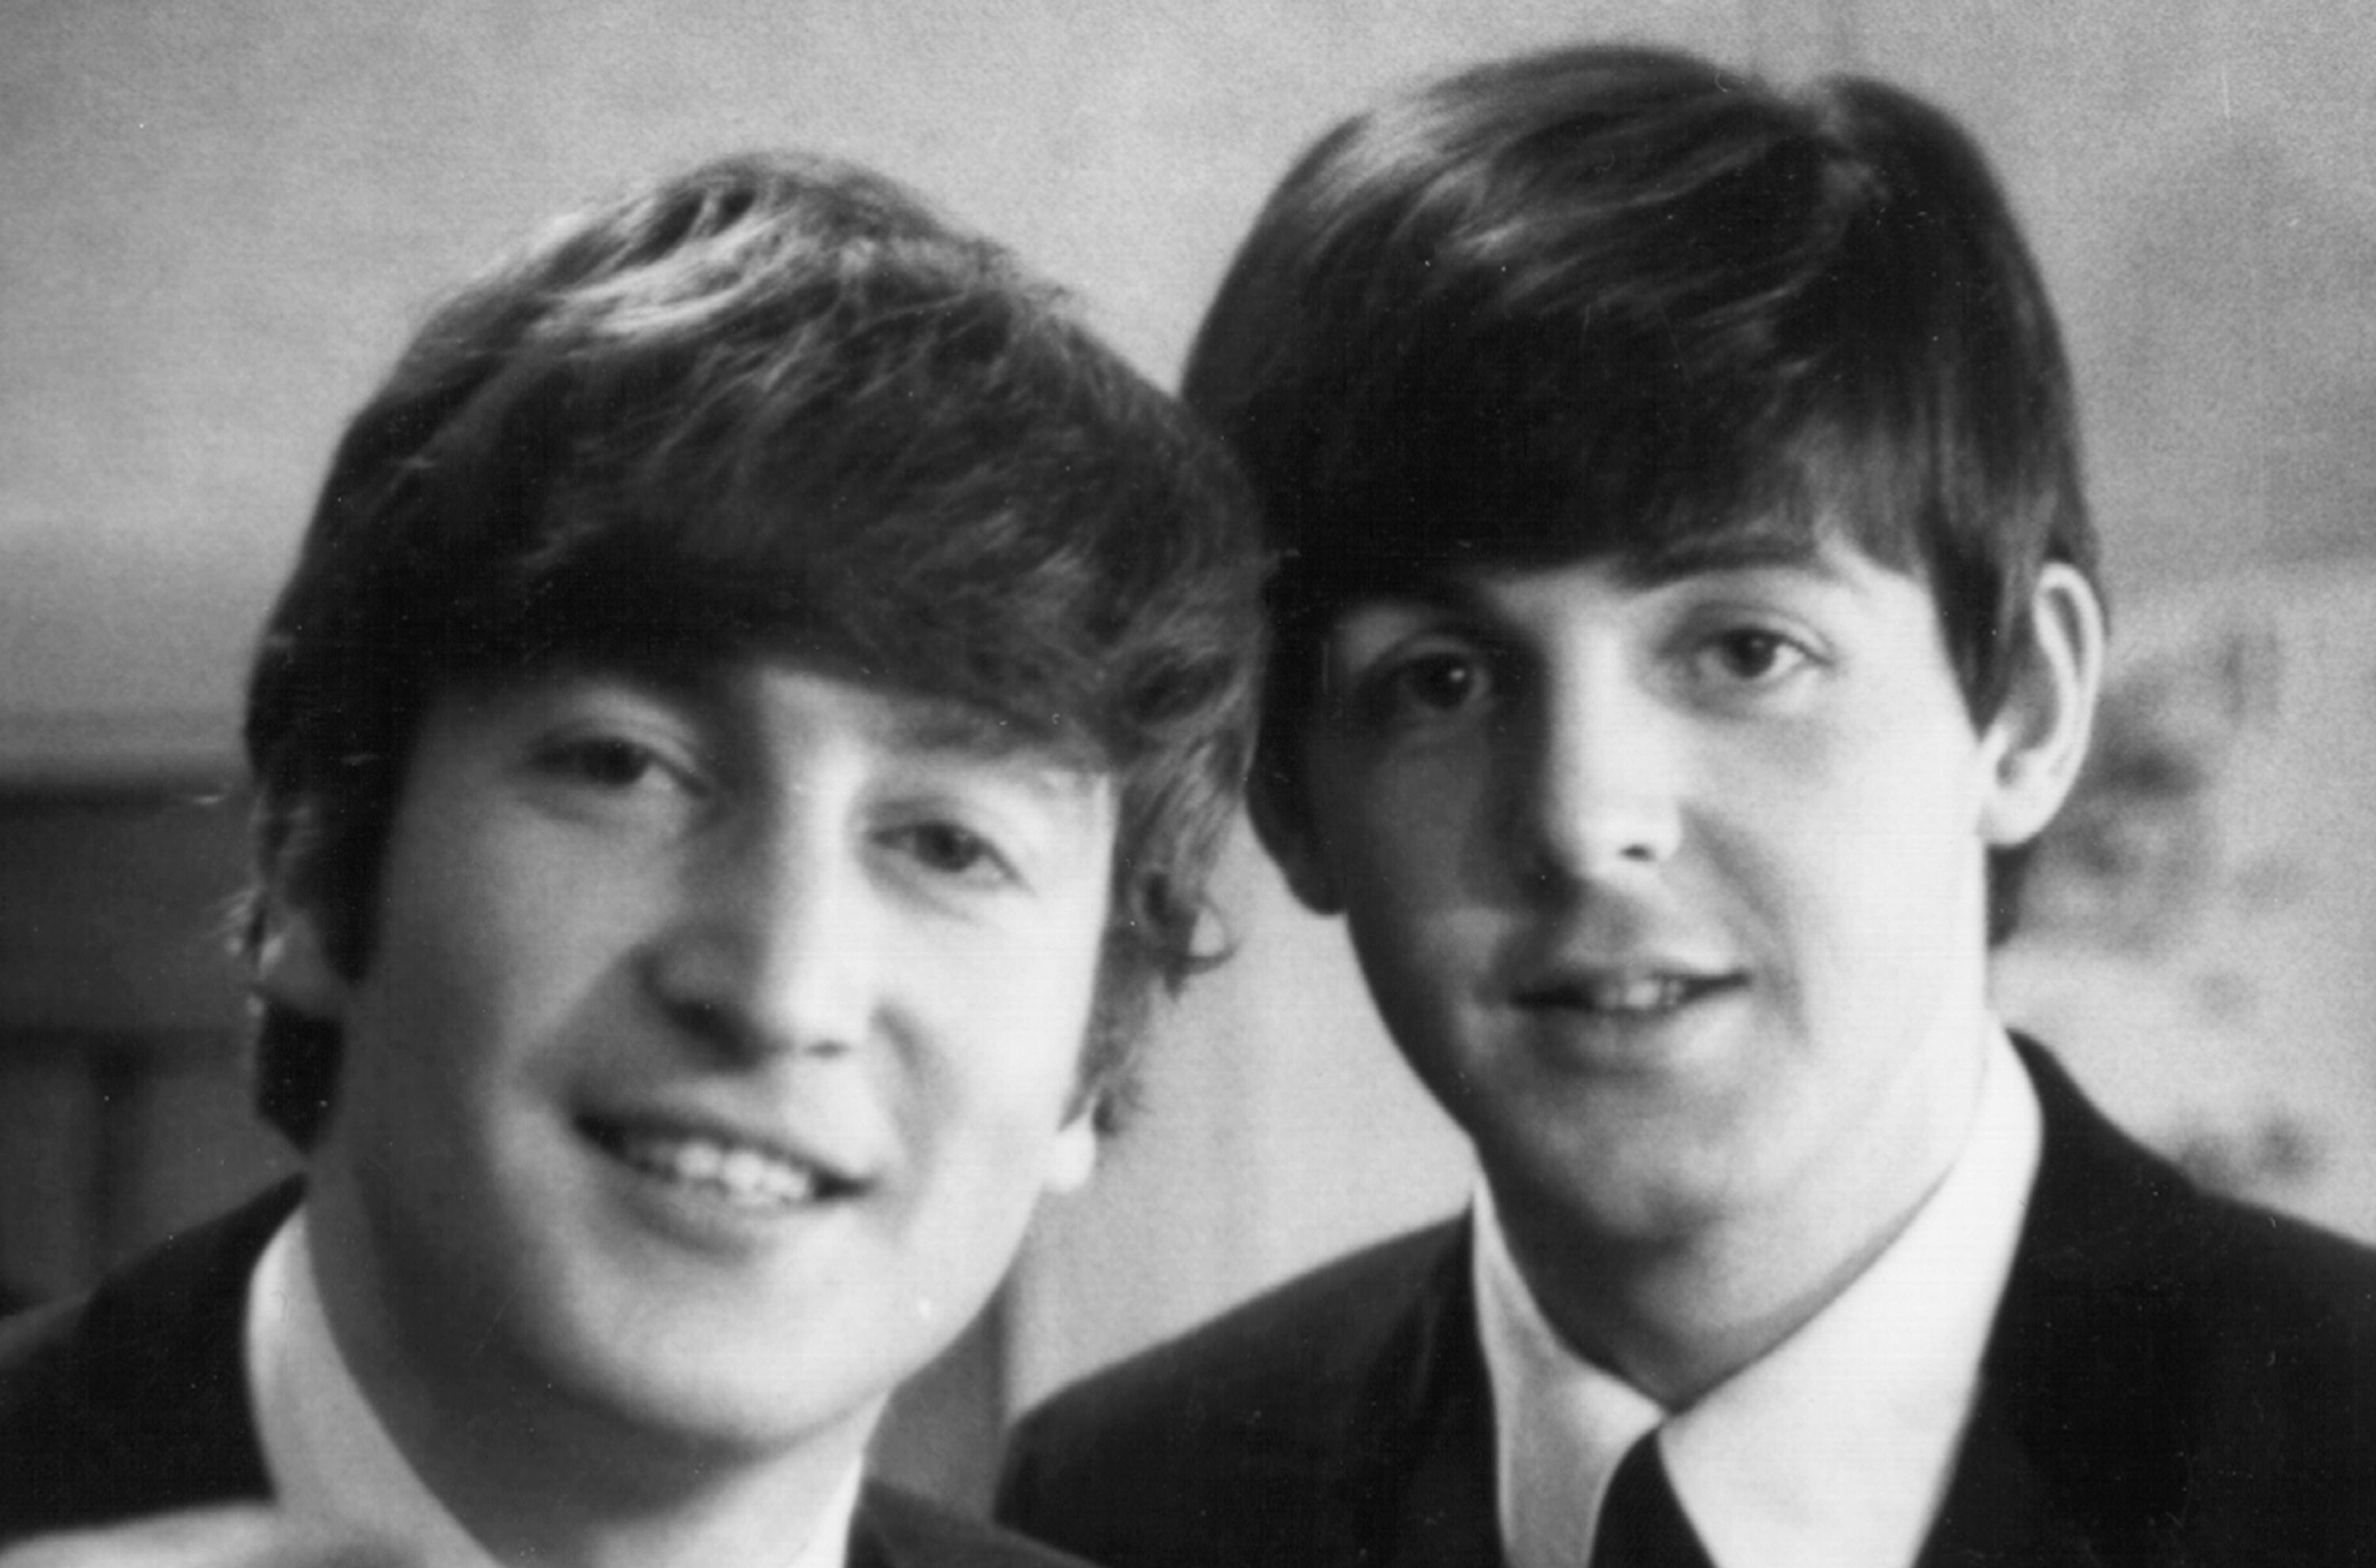 John Lennon y Paul McCartney posan para el espectáculo navideño de The Beatles, en Londres, en 1963.